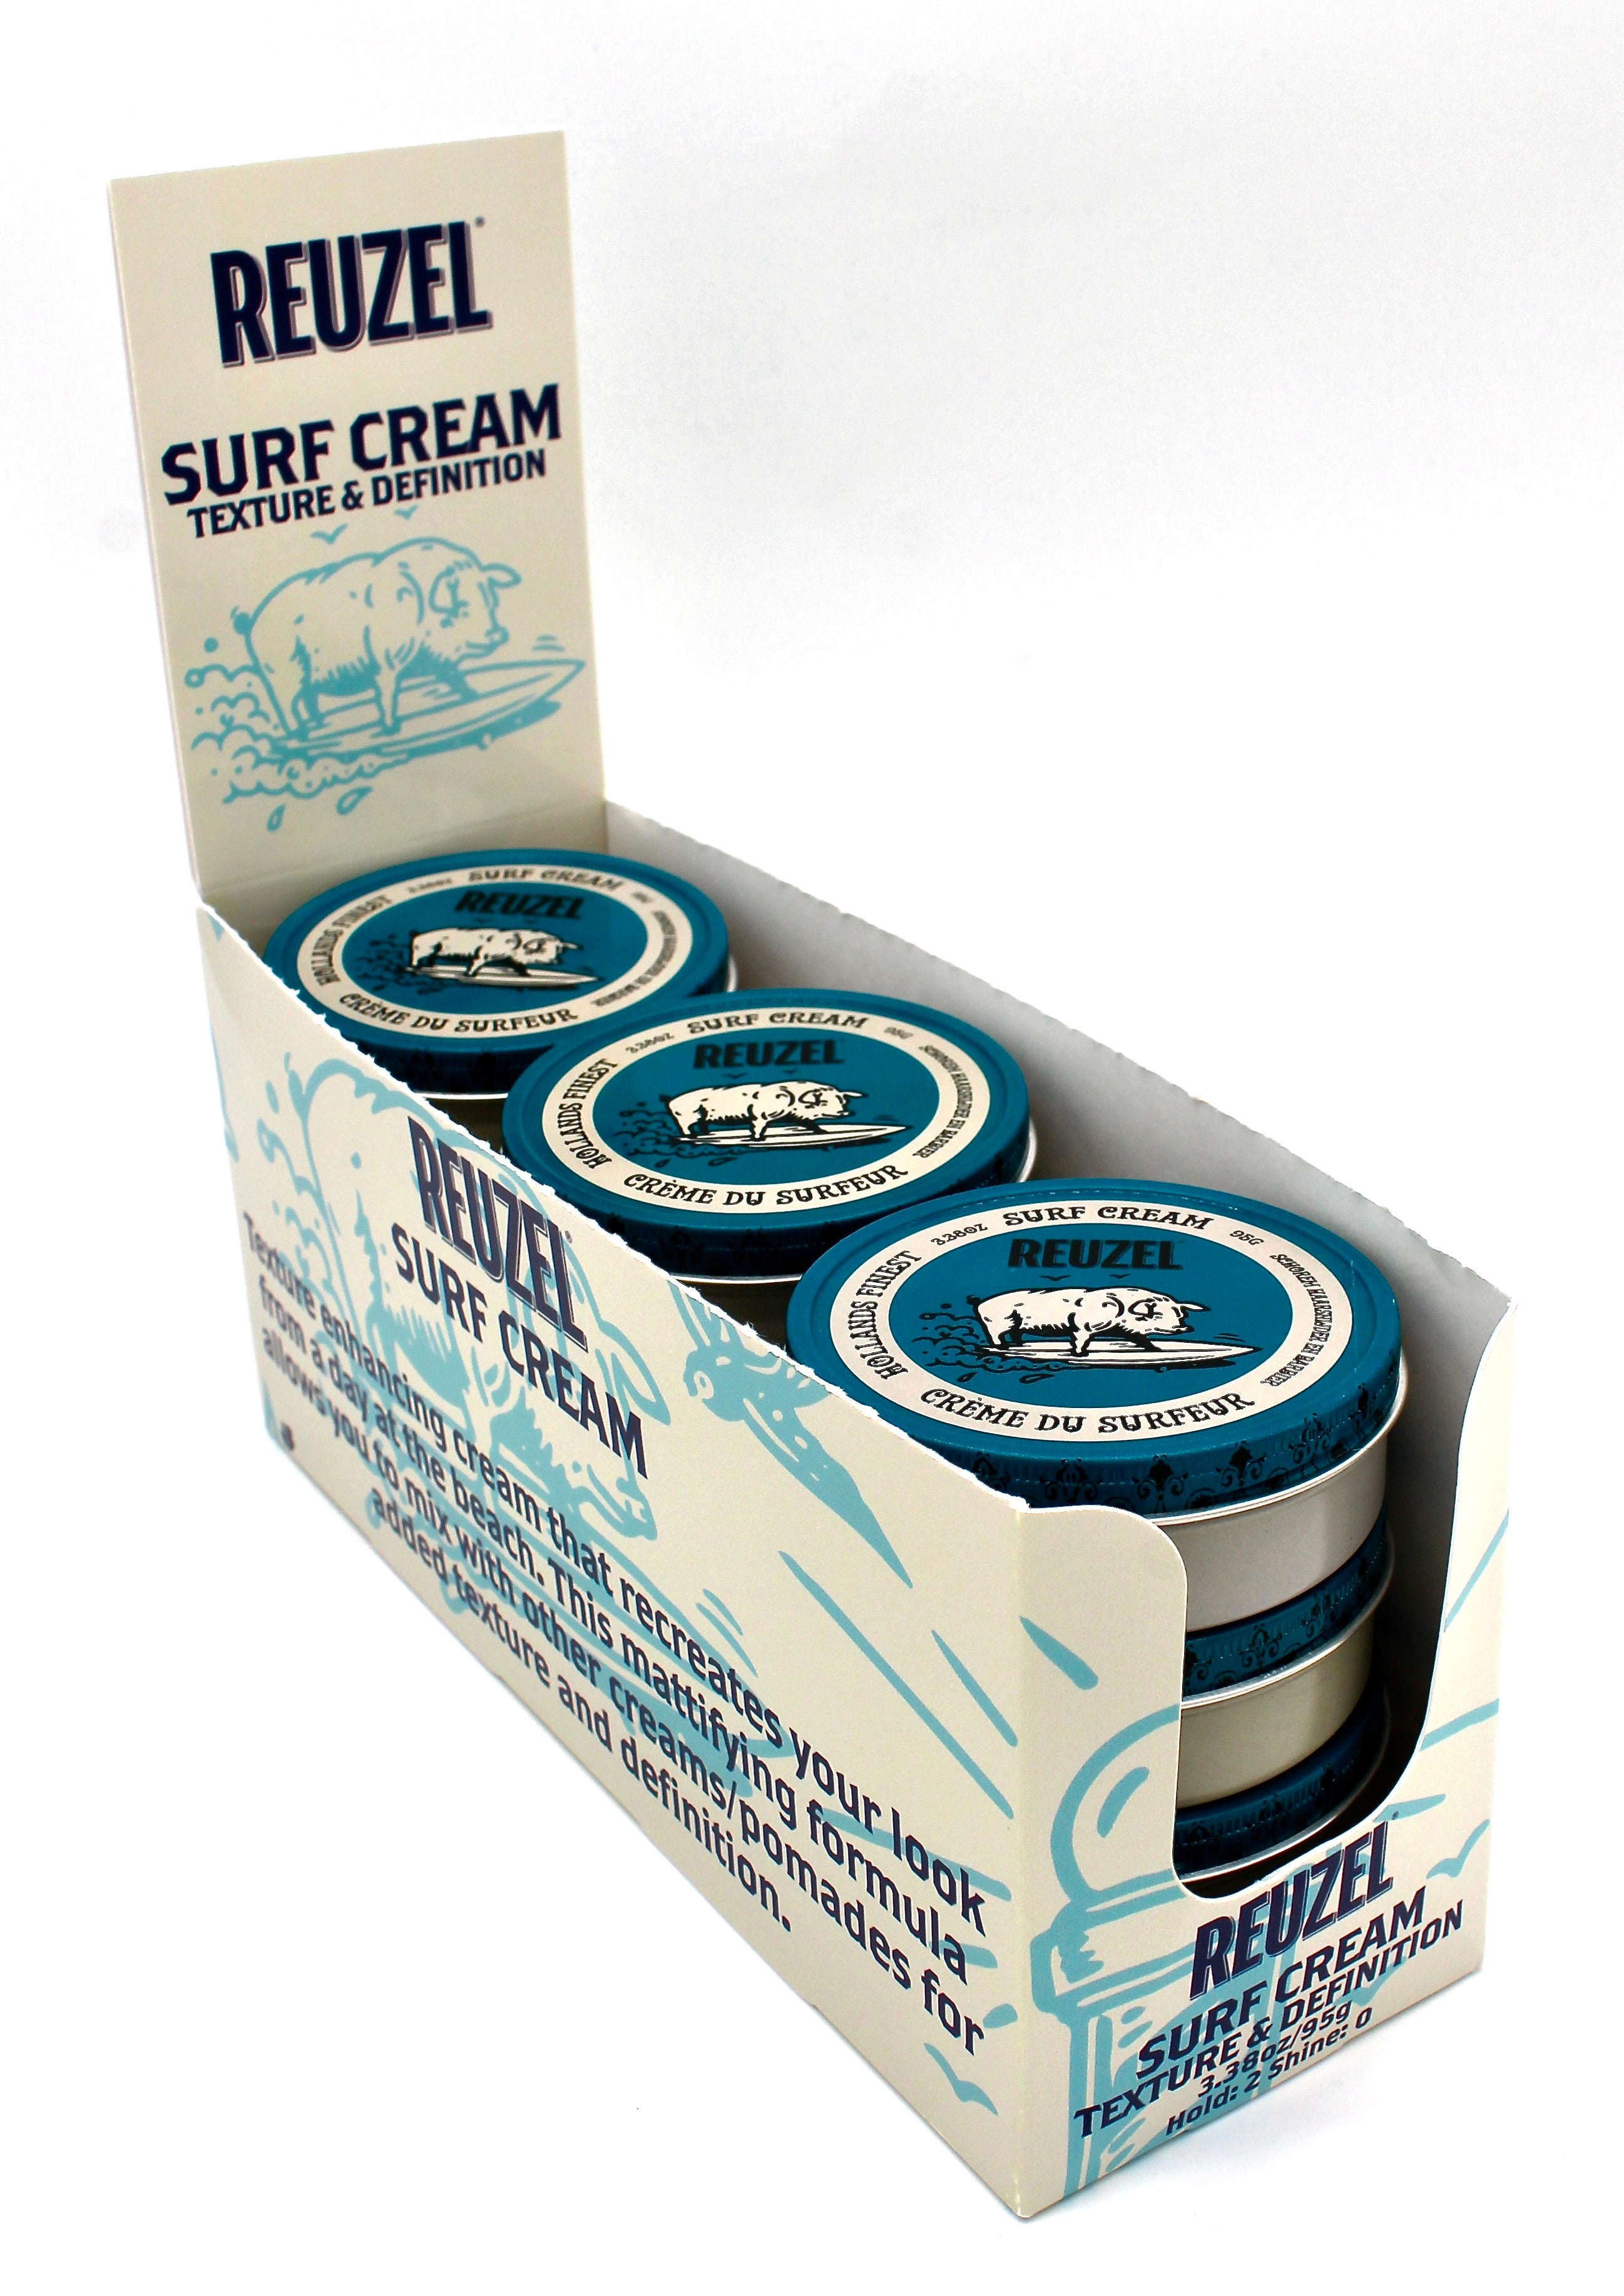 NEW Reuzel Surf Cream! Buy 11, Get 1 Free + Display